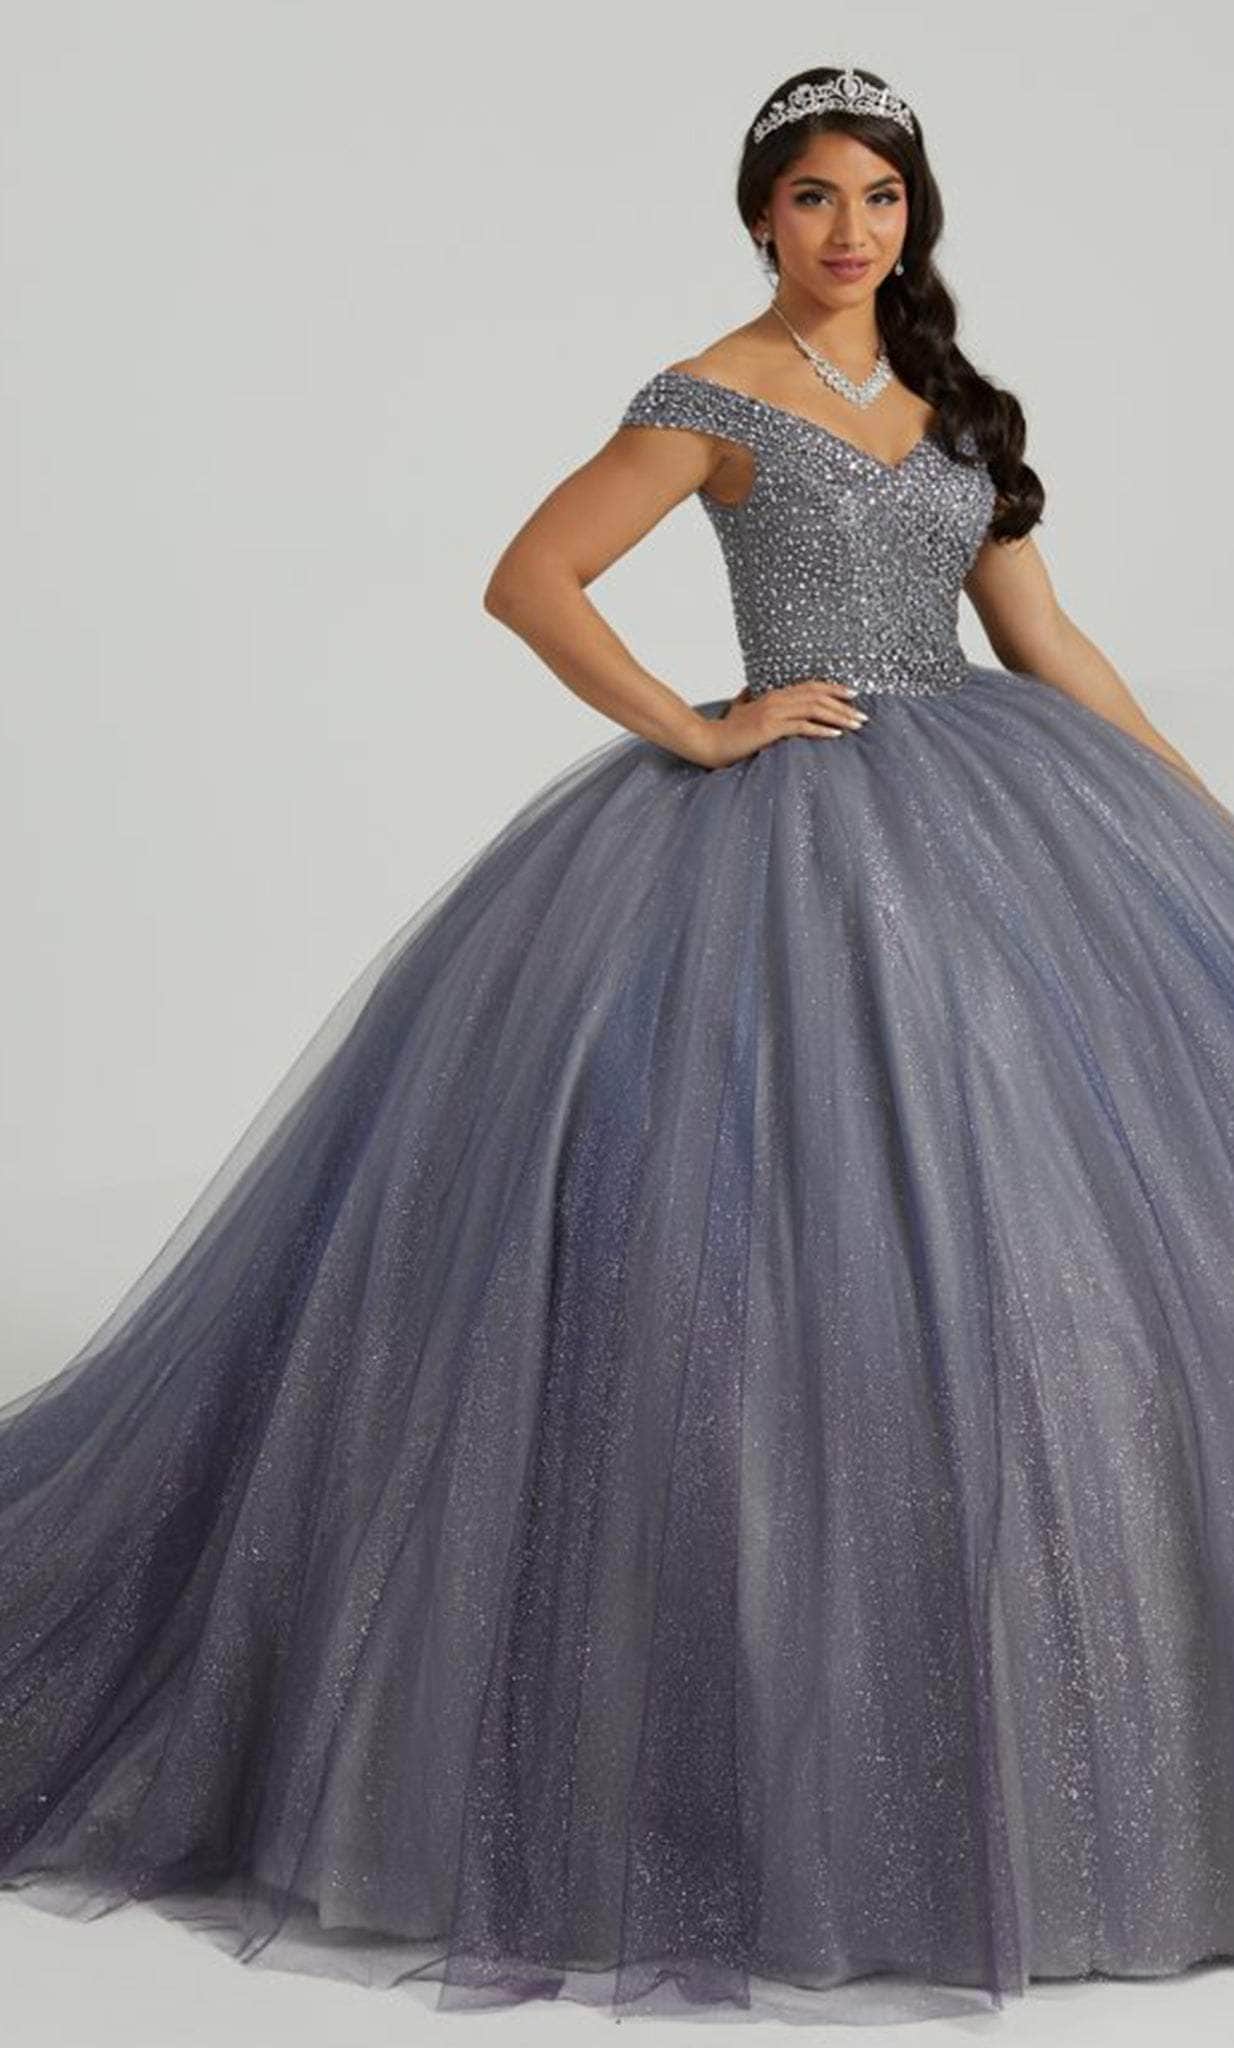 Fiesta Gowns 56475 - Ombre-Designed Rhinestone Dress
